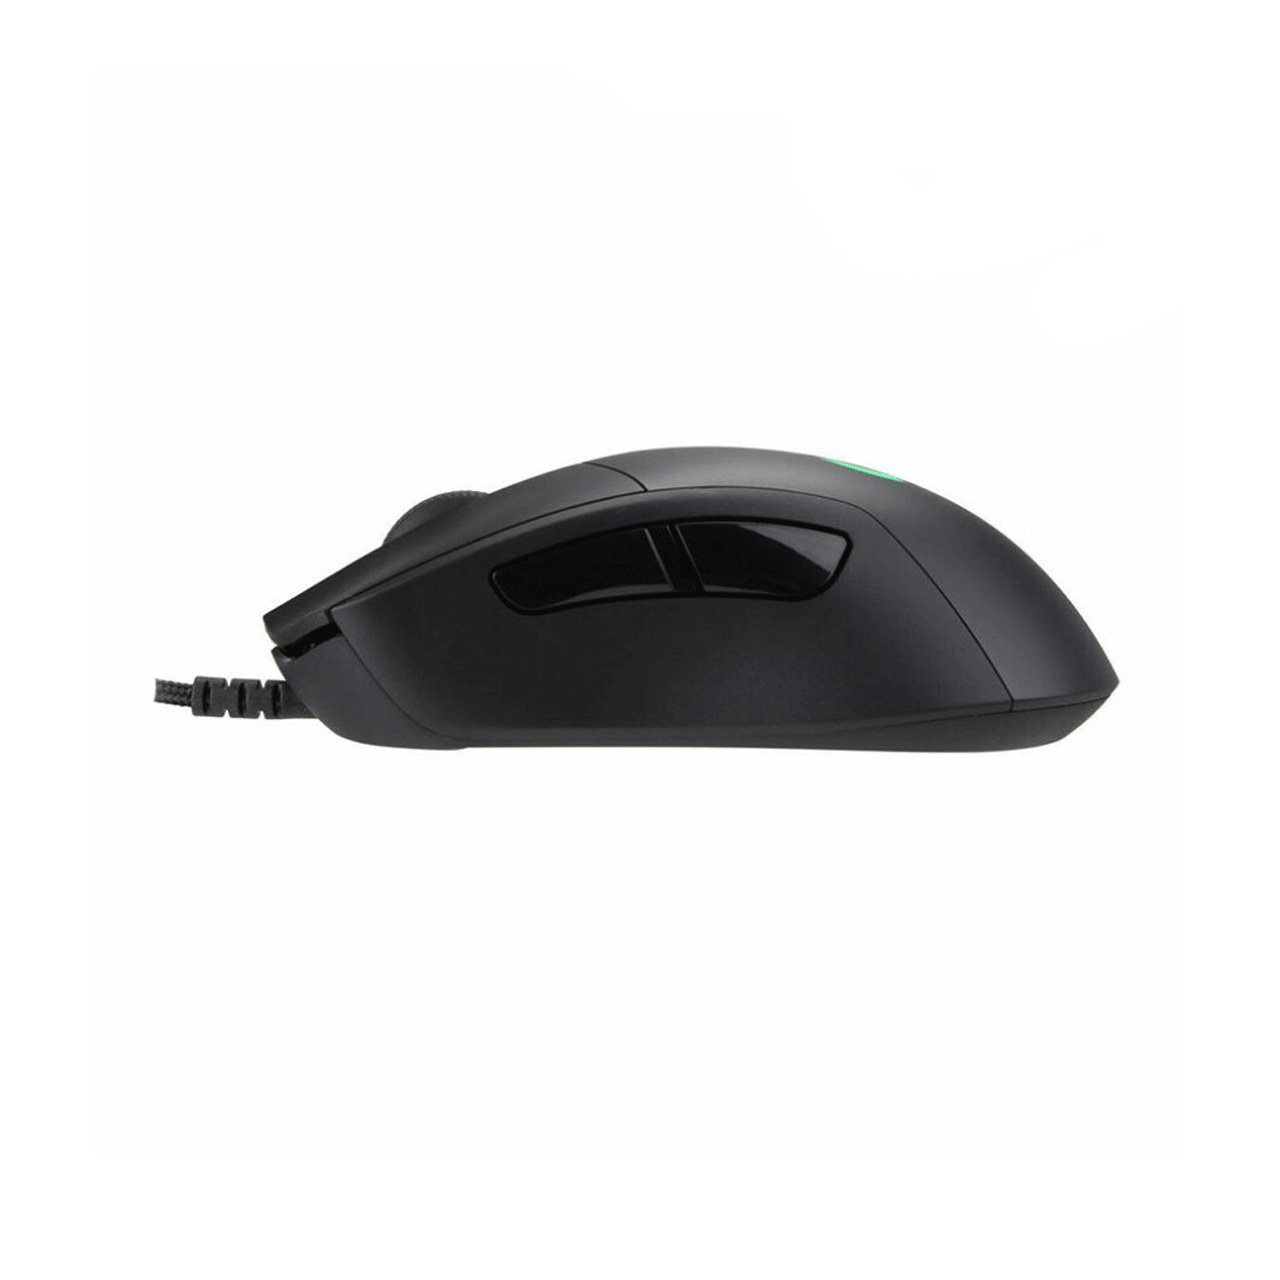 G403-Hero--Gaming----Mouse